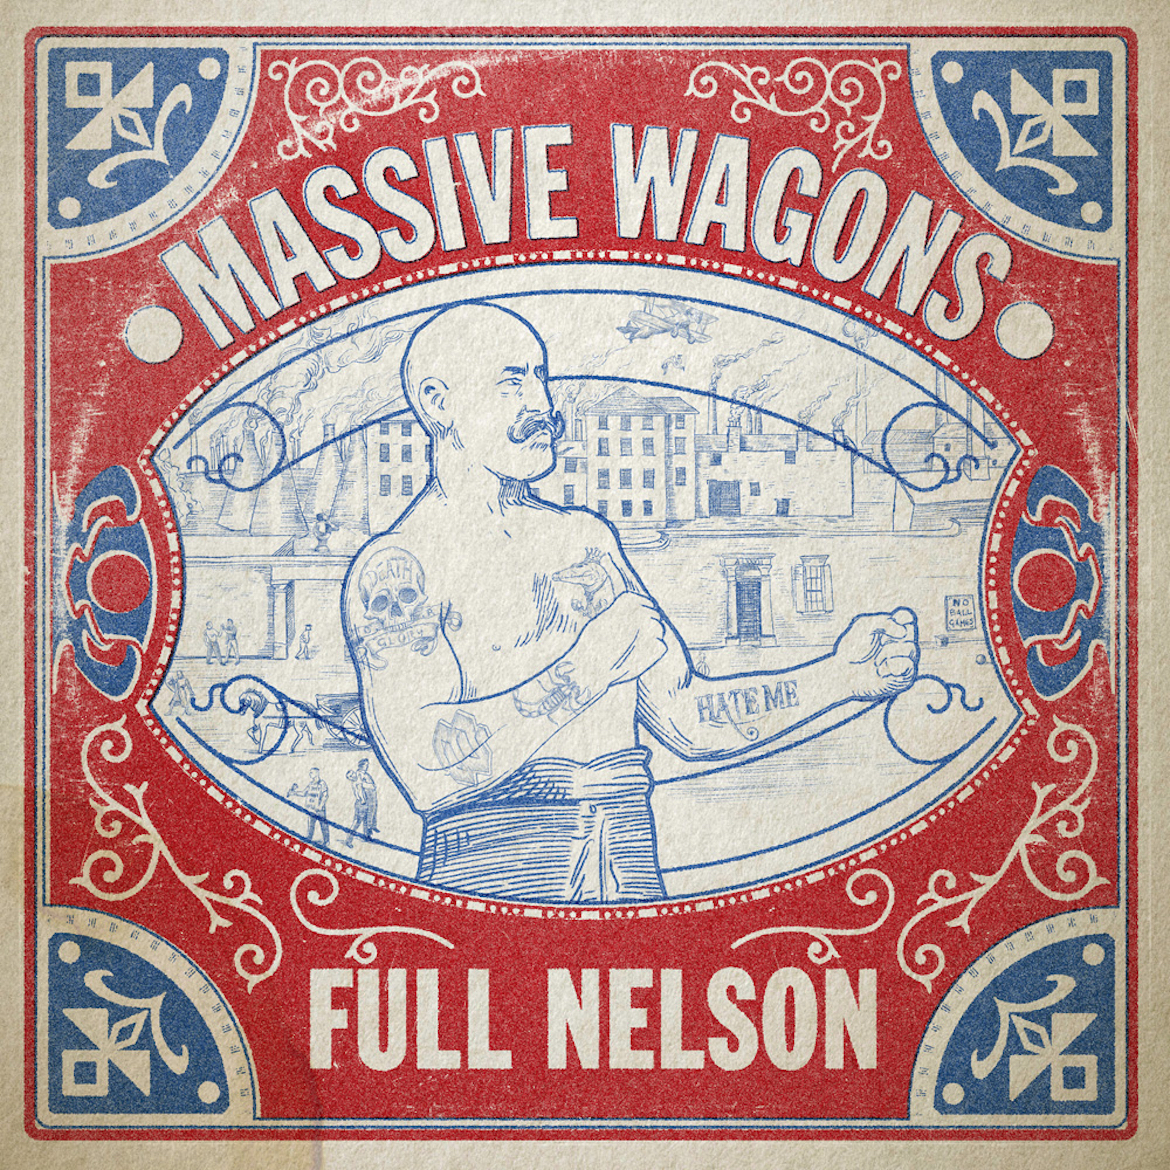 Full Nelson album cover from Massive Wagons